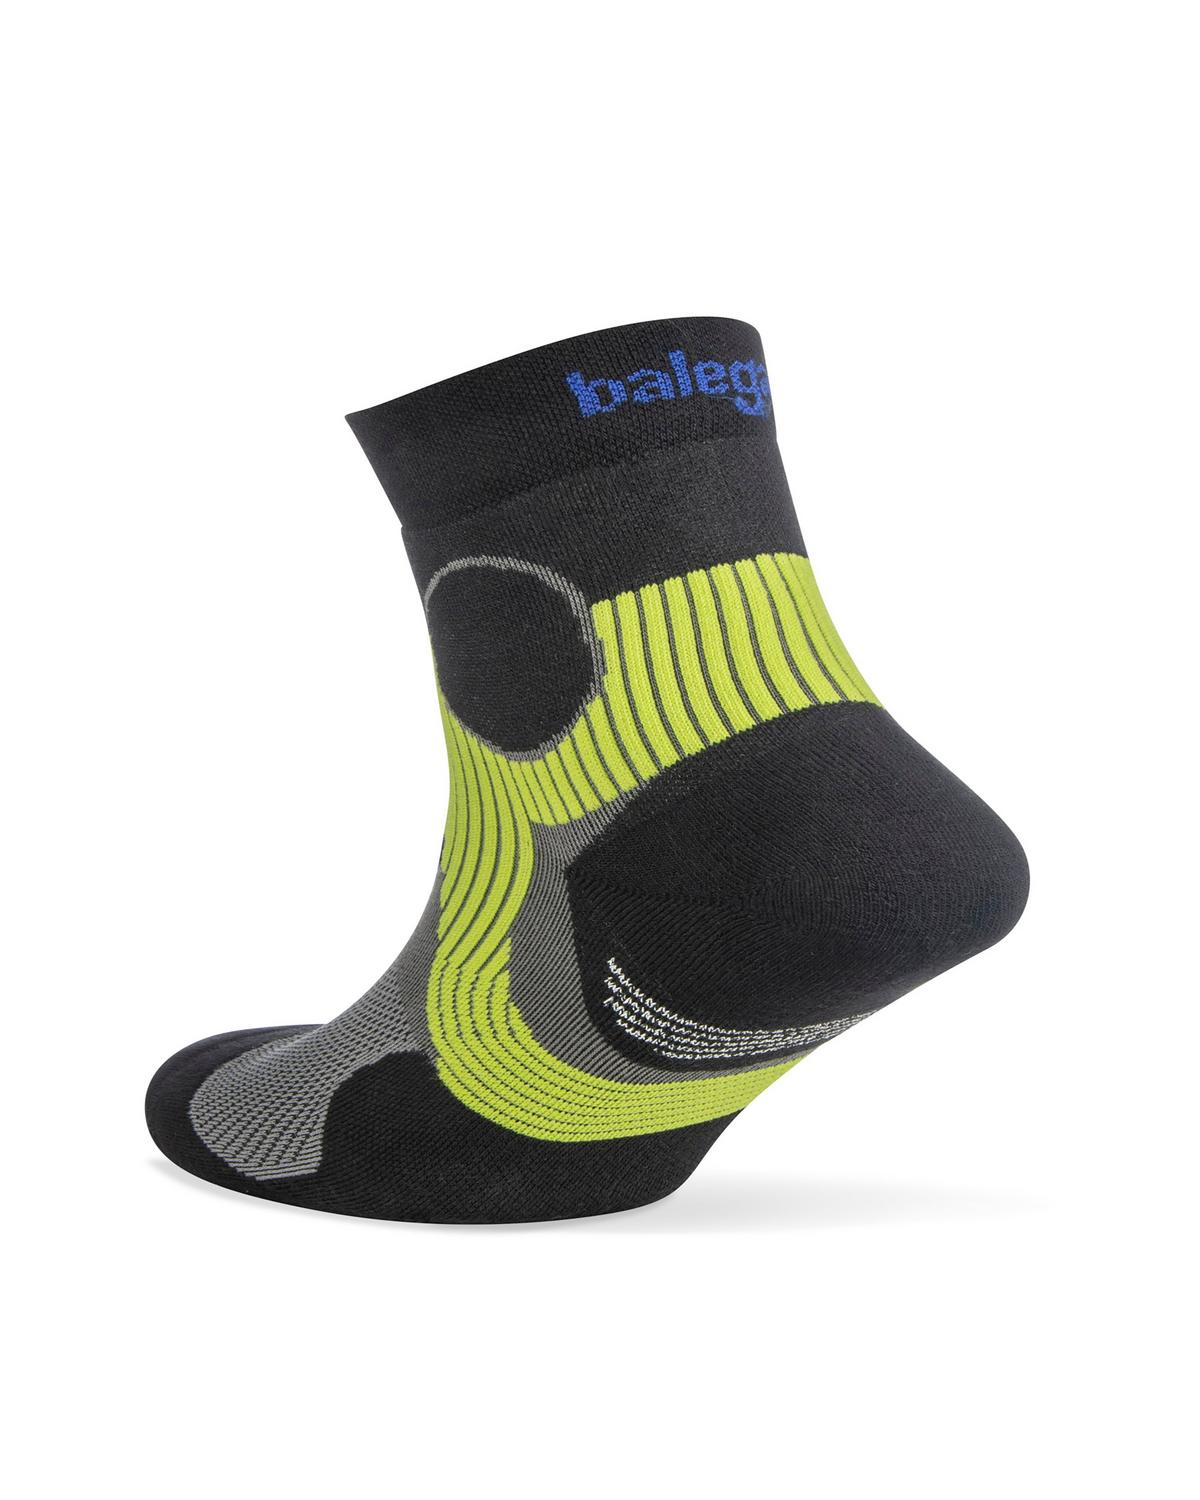 Balega Support Crew Socks  -  Black